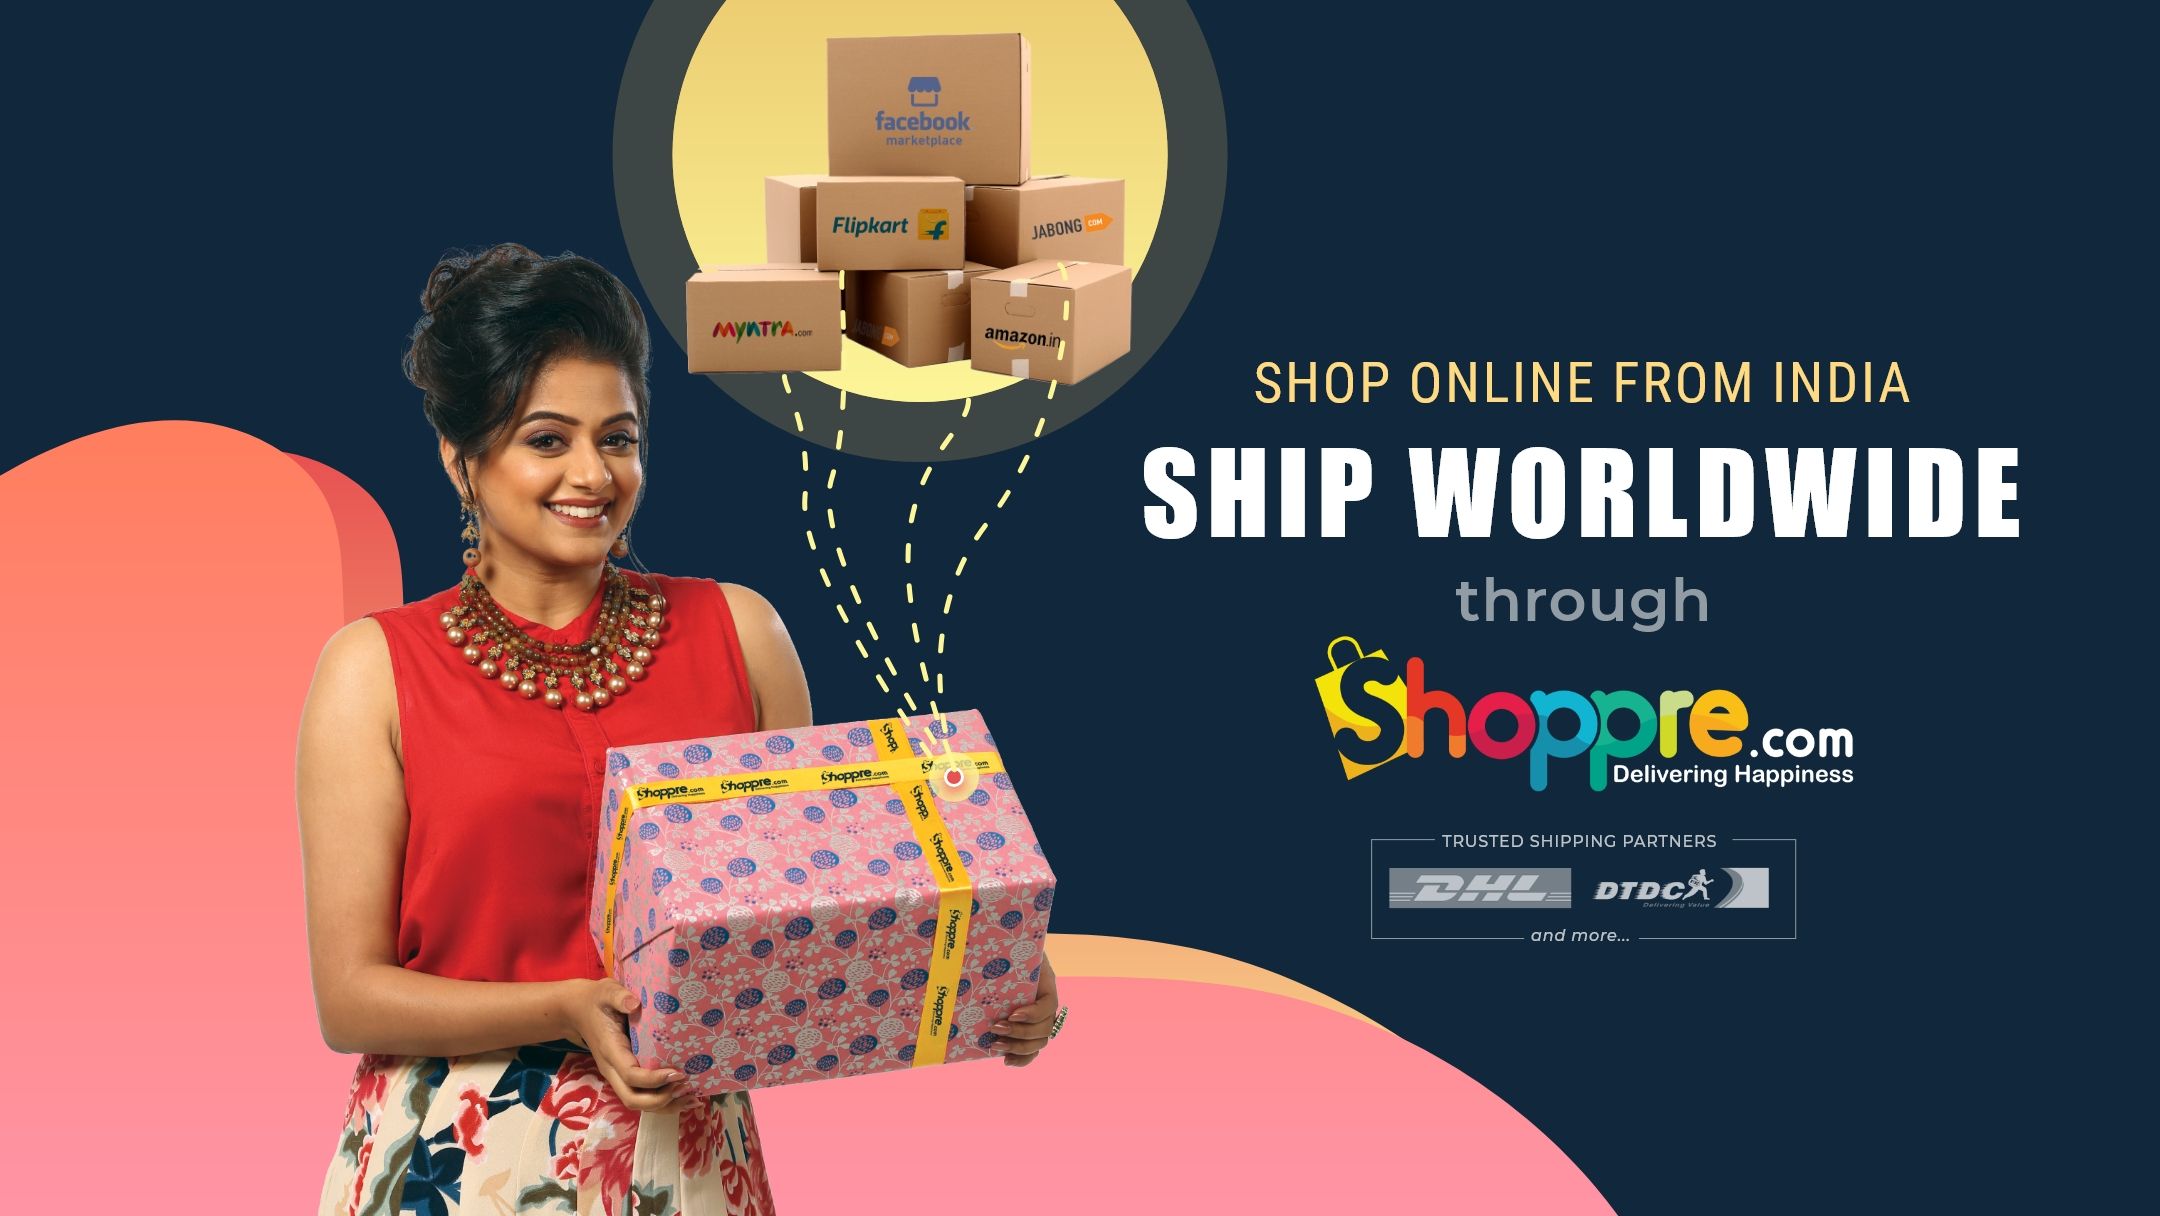 Tatacliq Online Shopping India - Ship Worldwide at Lowest Price